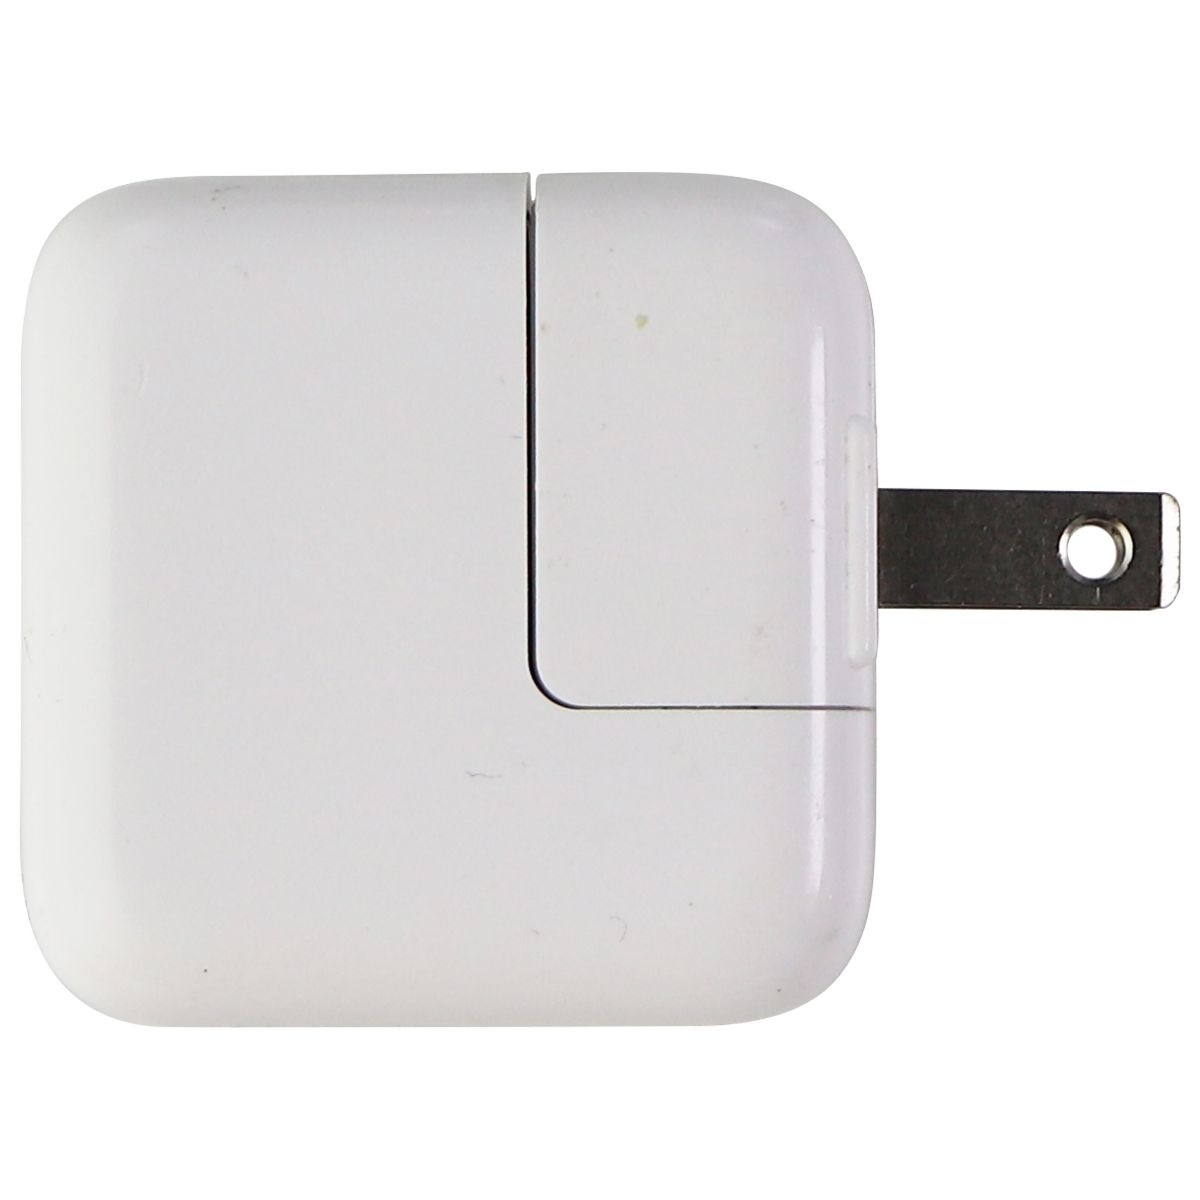 Apple (12-Watt) 5.2V/2.4A Single USB Wall Charger Power Adapter - White (A2167)